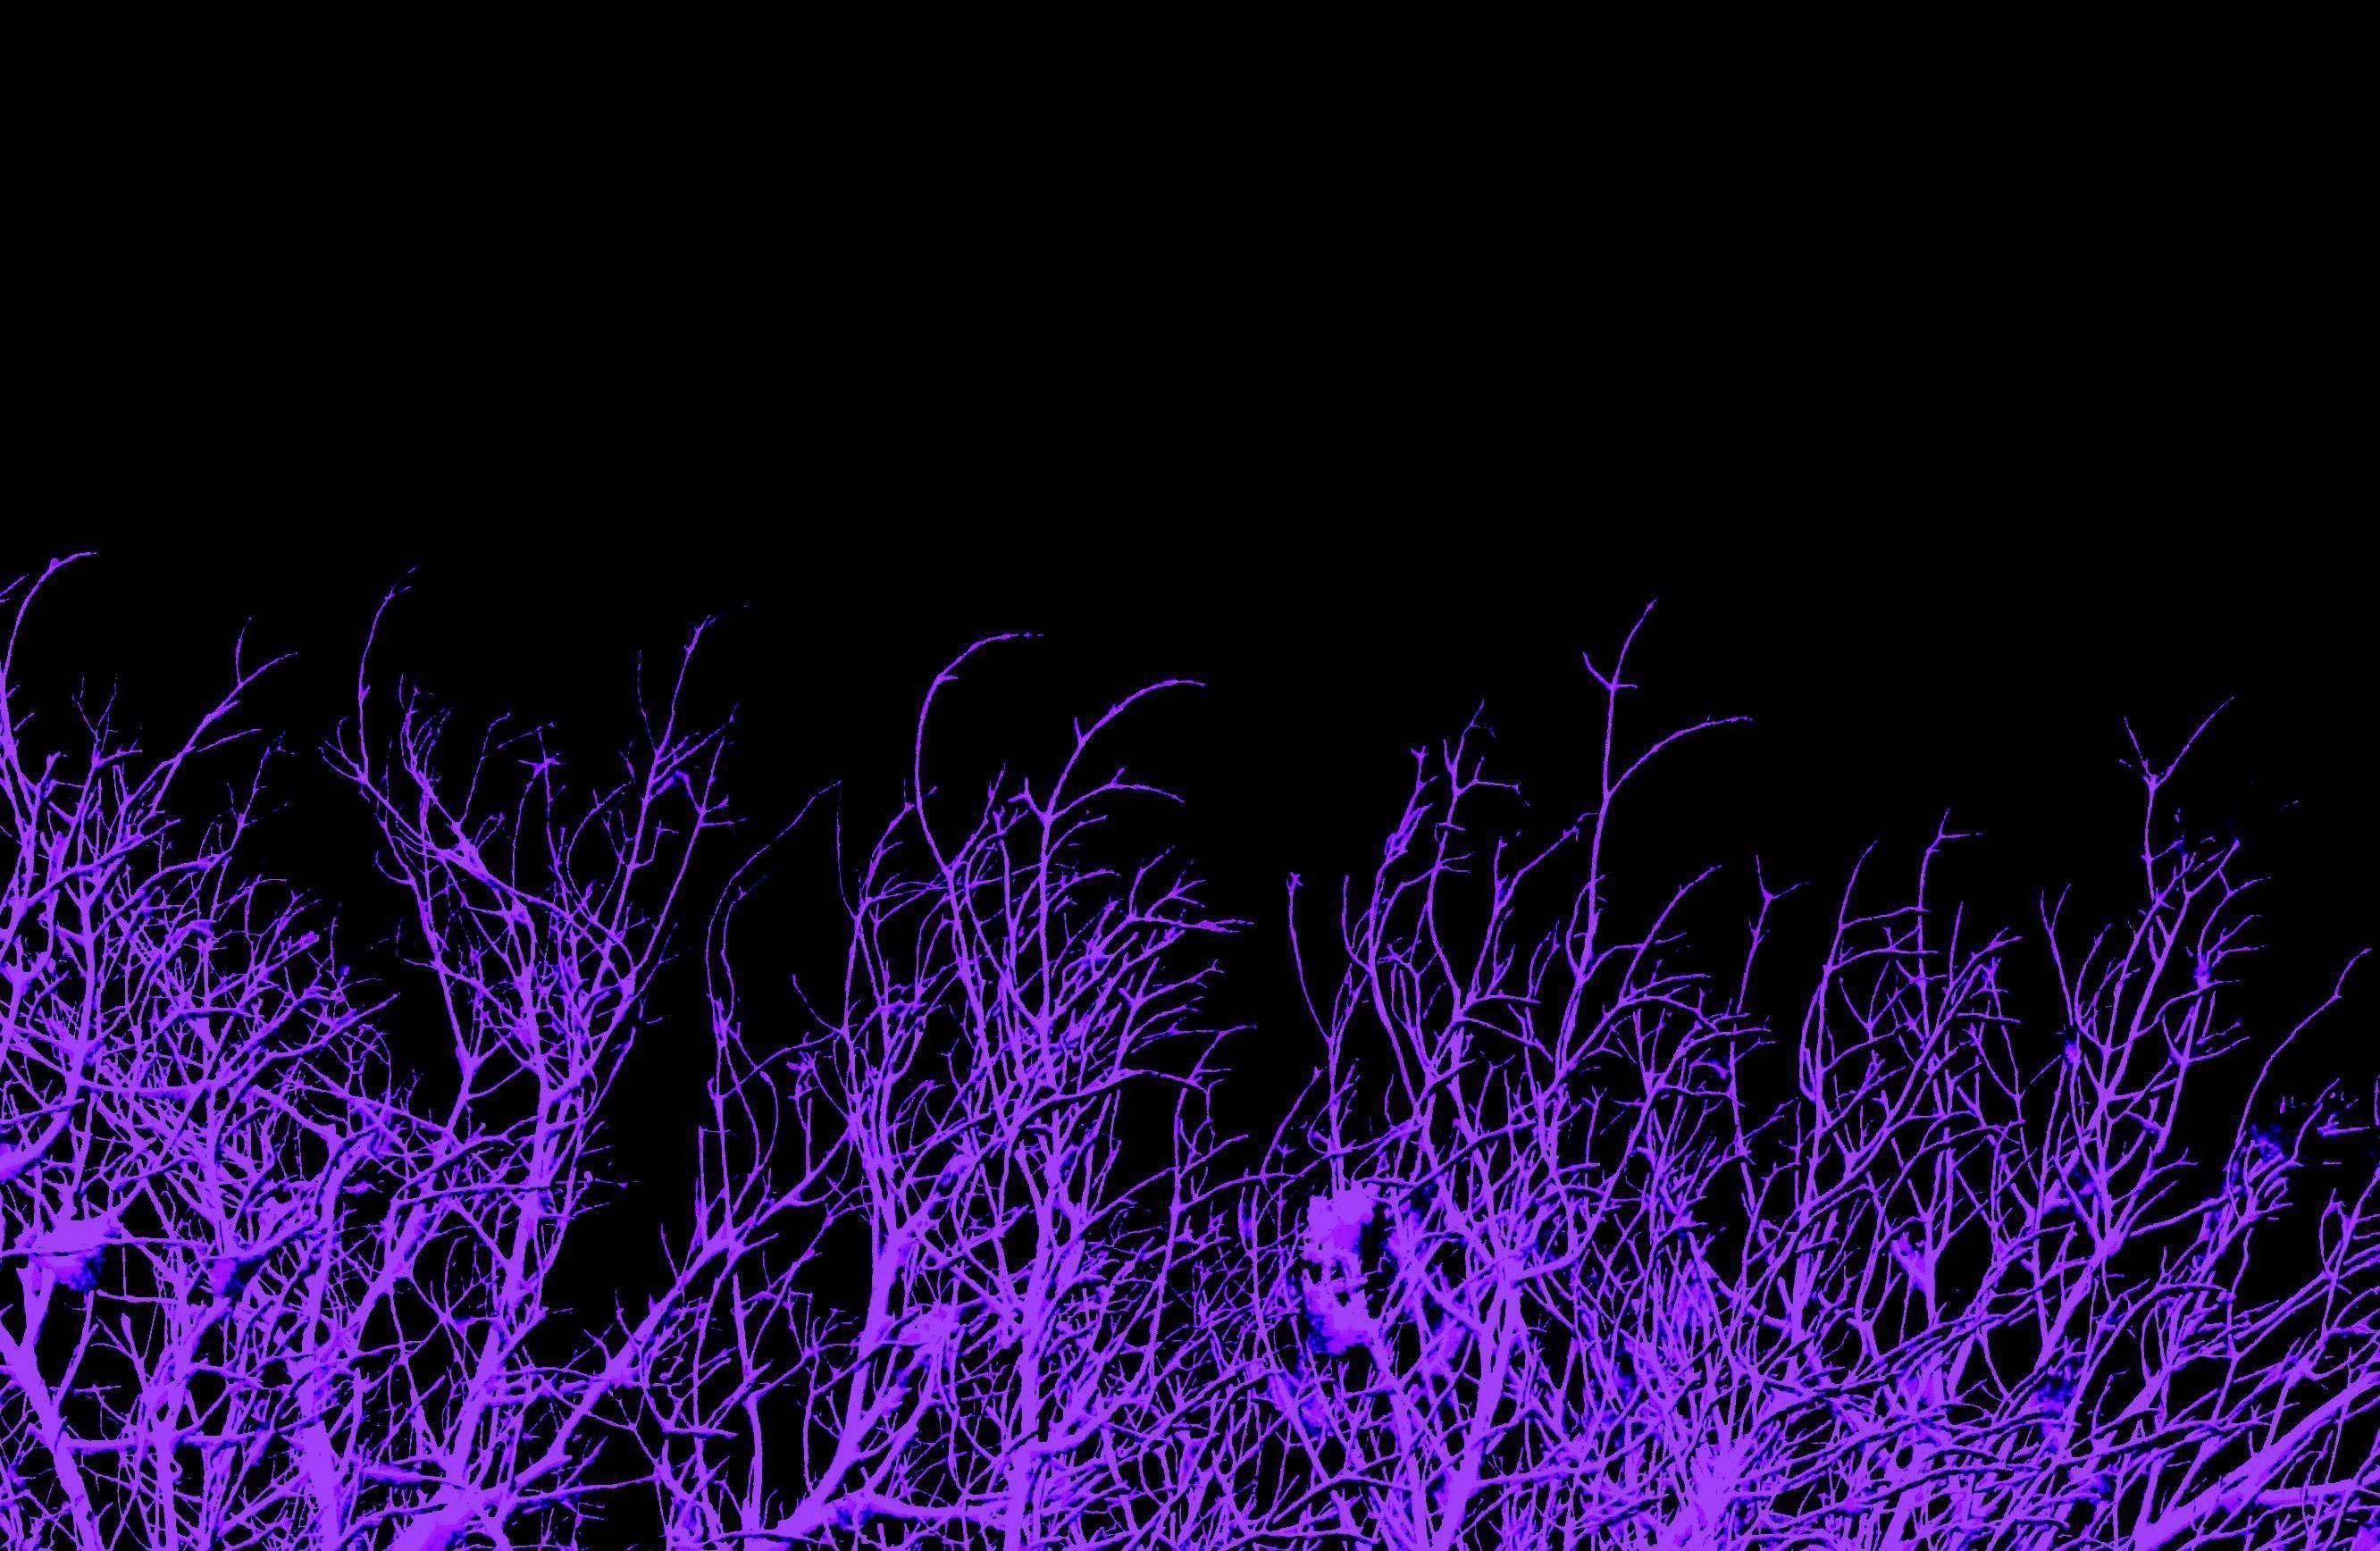 Wallpaper For > Dark Purple Background Tumblr